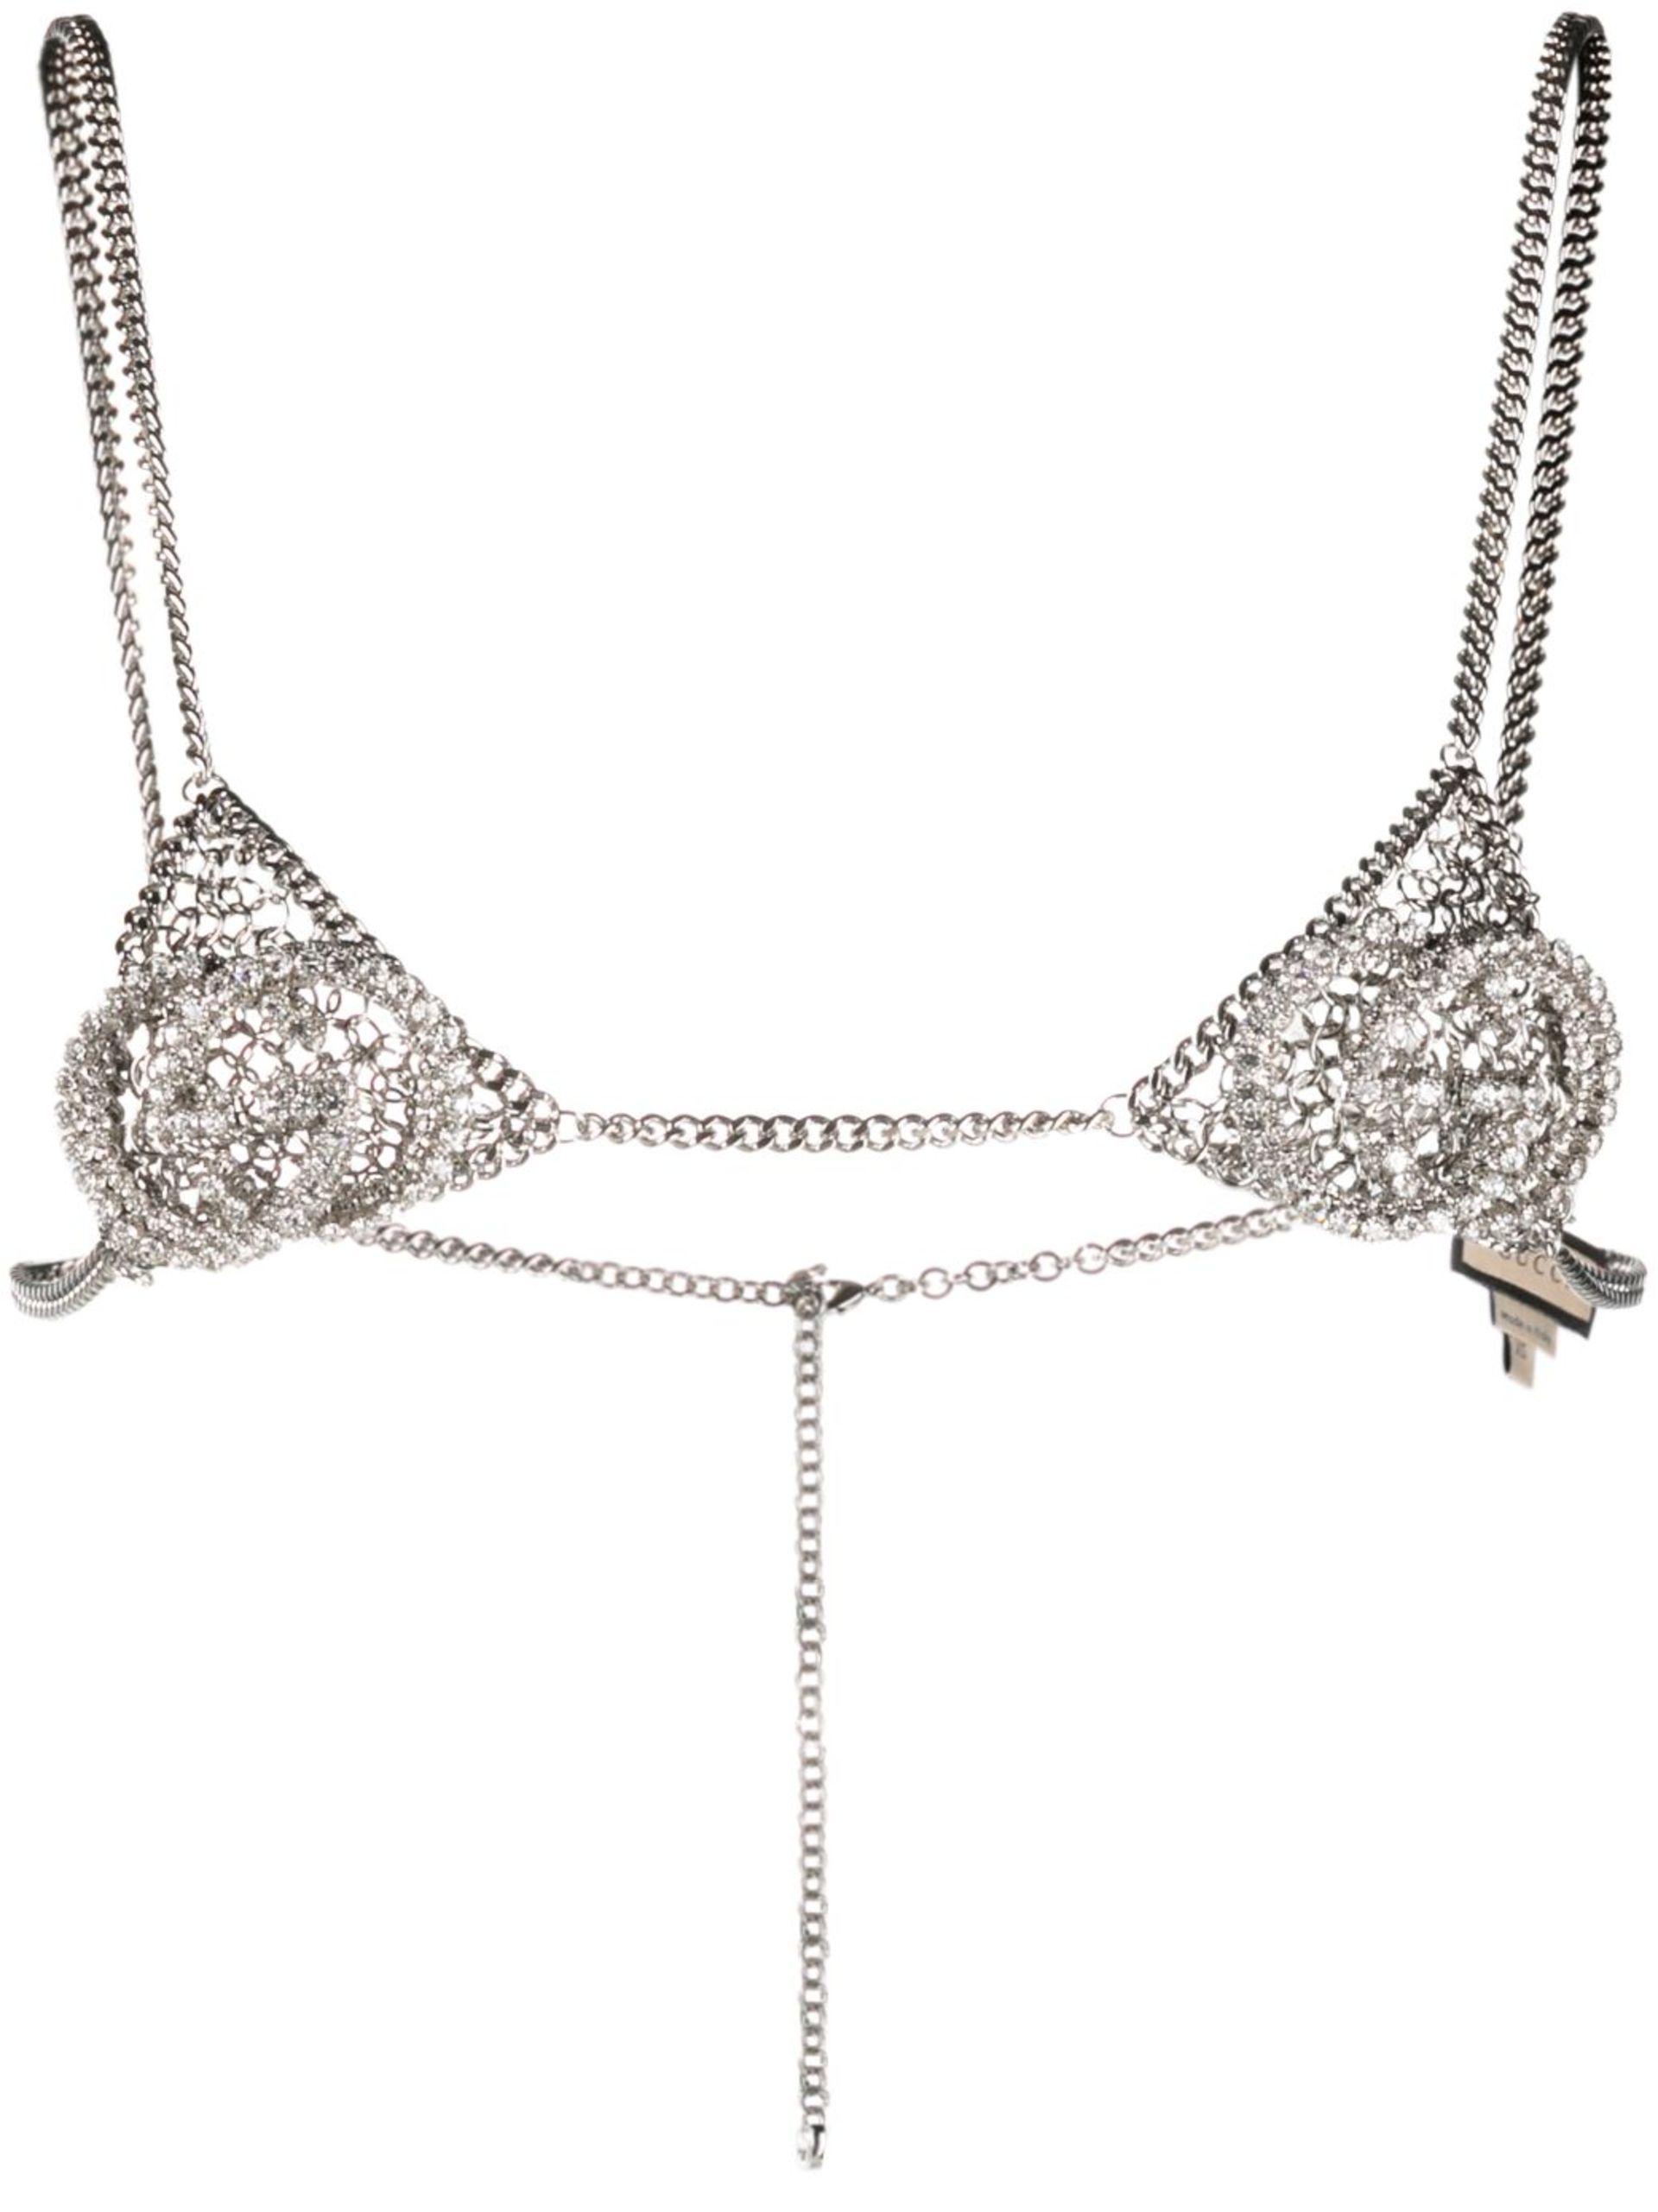 Gucci Interlocking G Embellished Chain Bra in Metallic